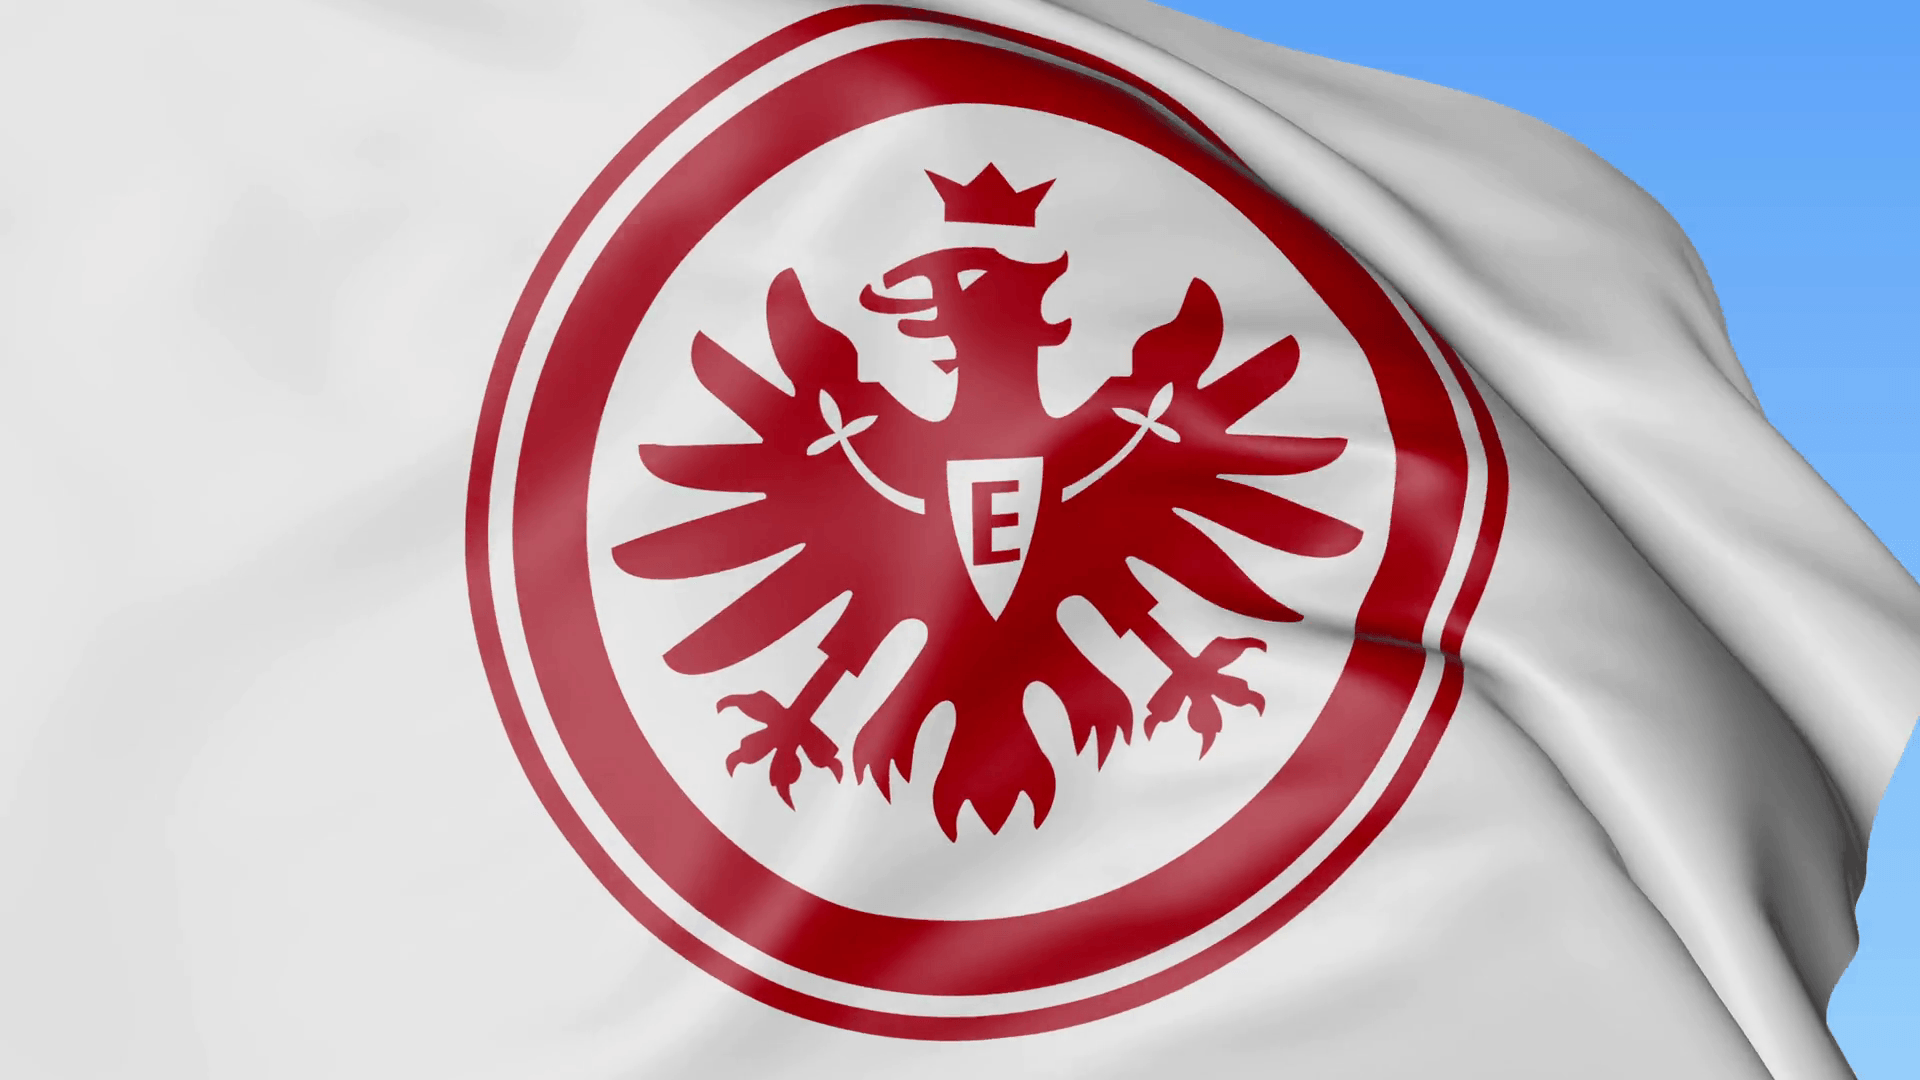 Close Up Of Waving Flag With Eintracht Frankfurt Football Club Logo